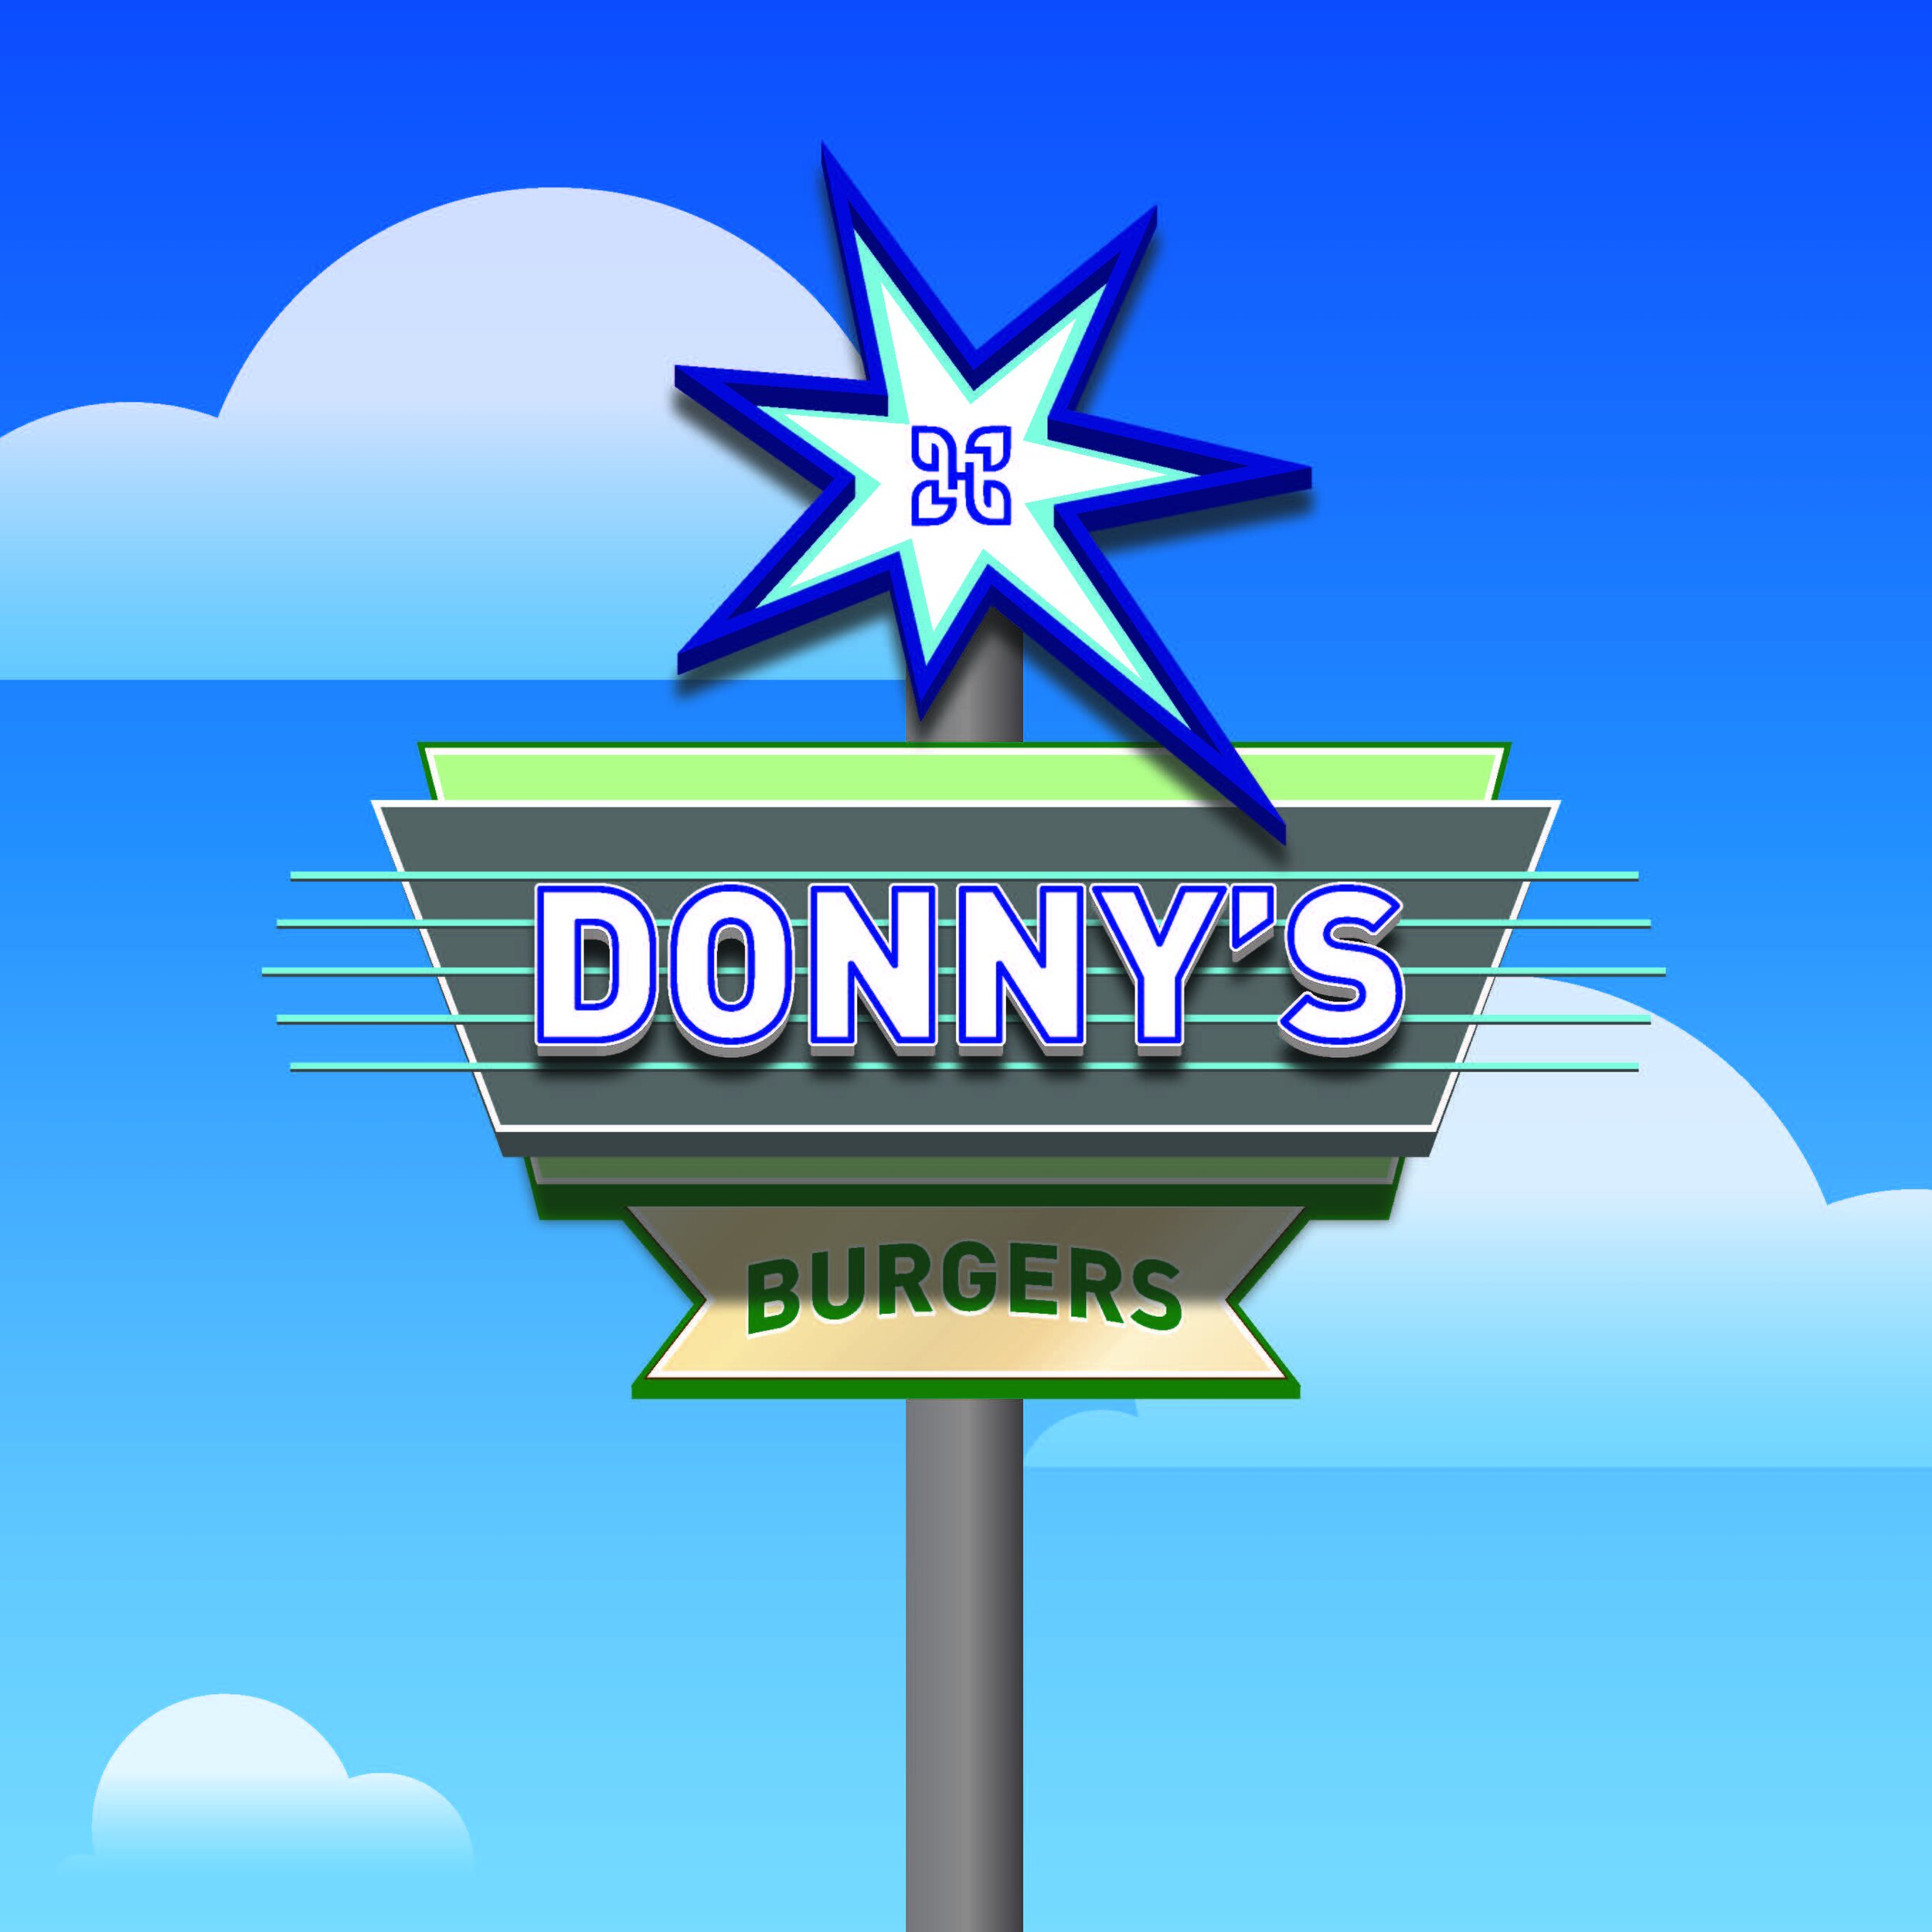 DONNY'S BURGERS.jpg